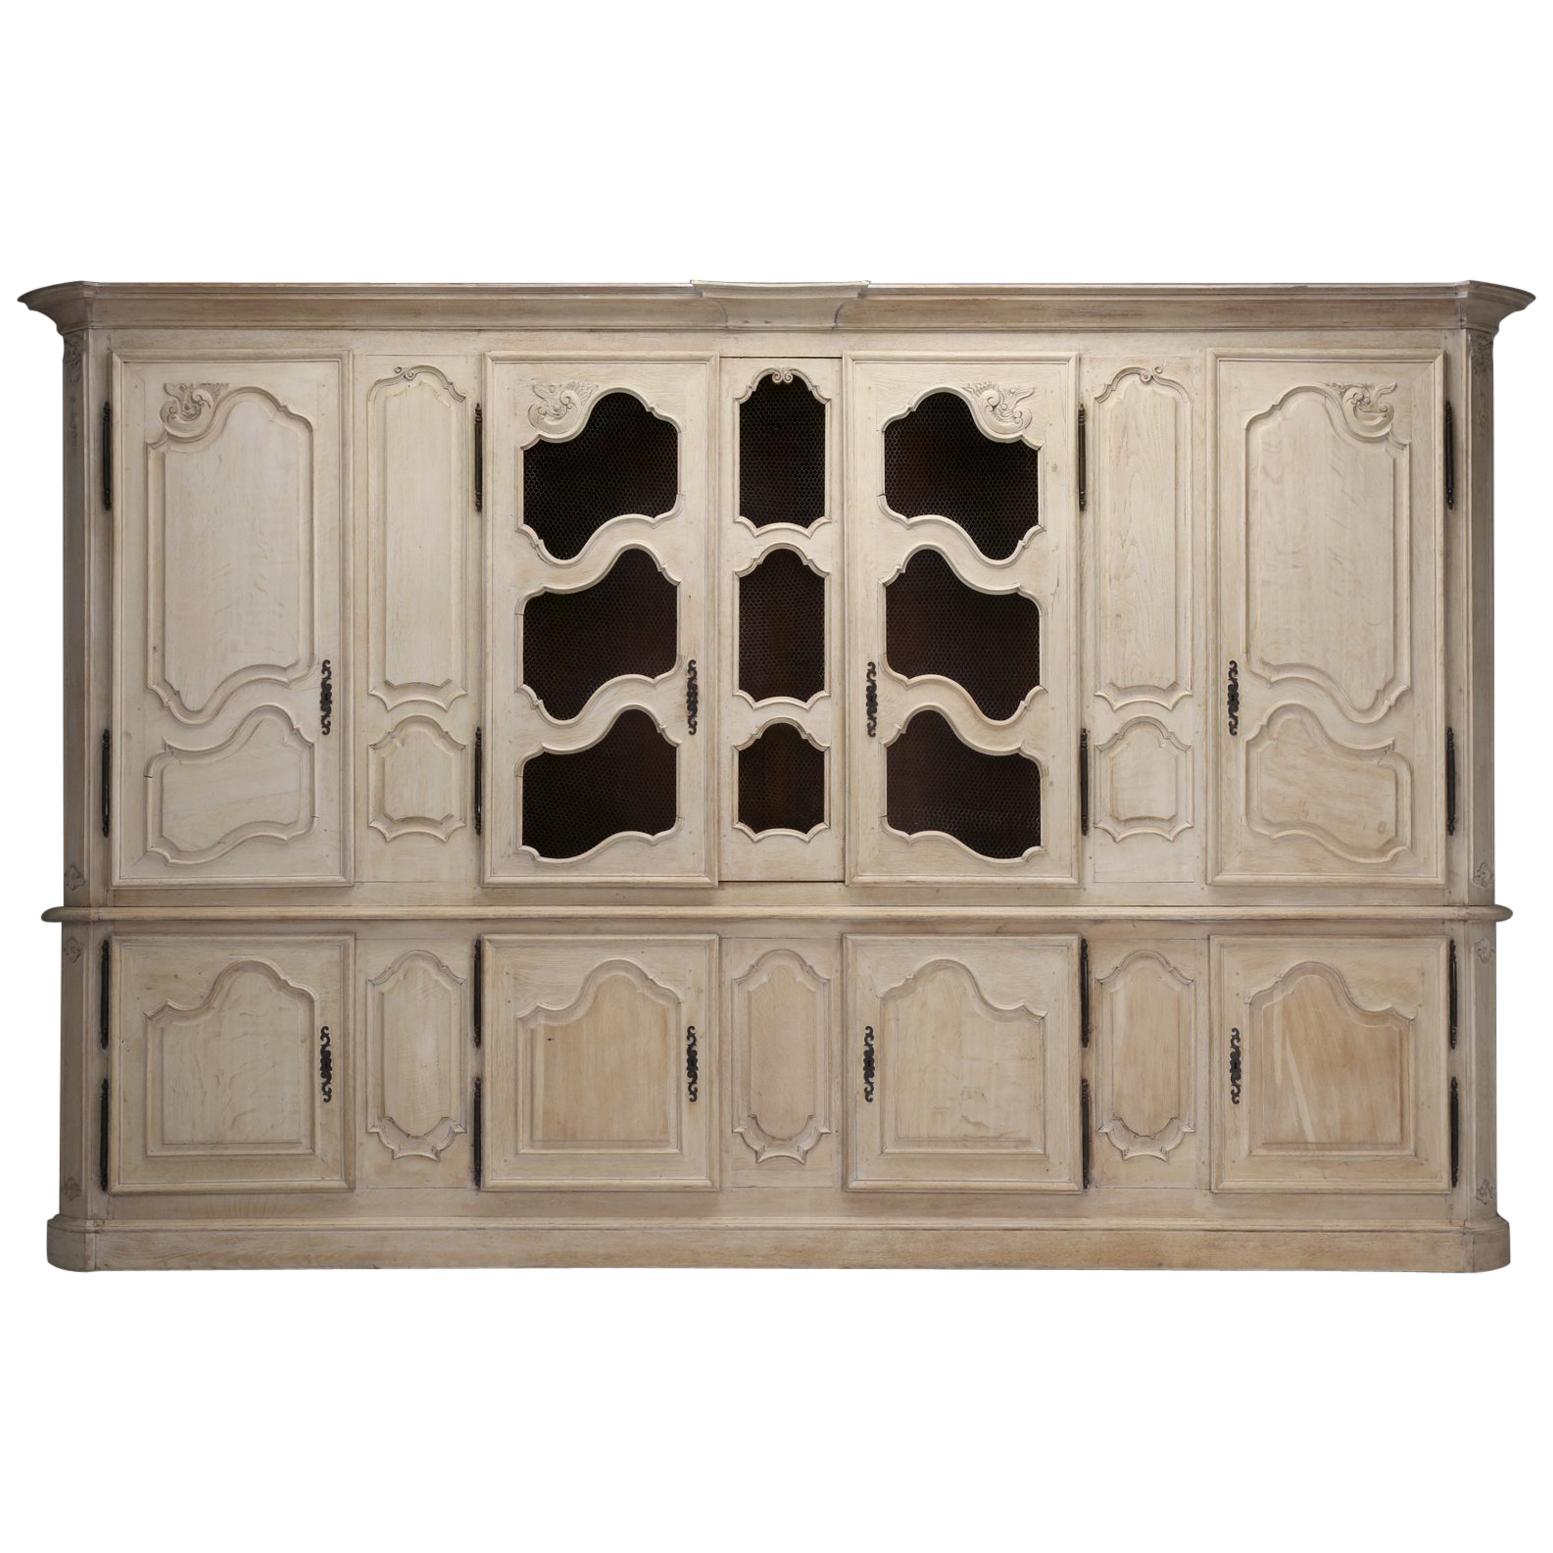 Antique French Bookcase or Cabinet in Limed White Oak Older Restoration c1800's